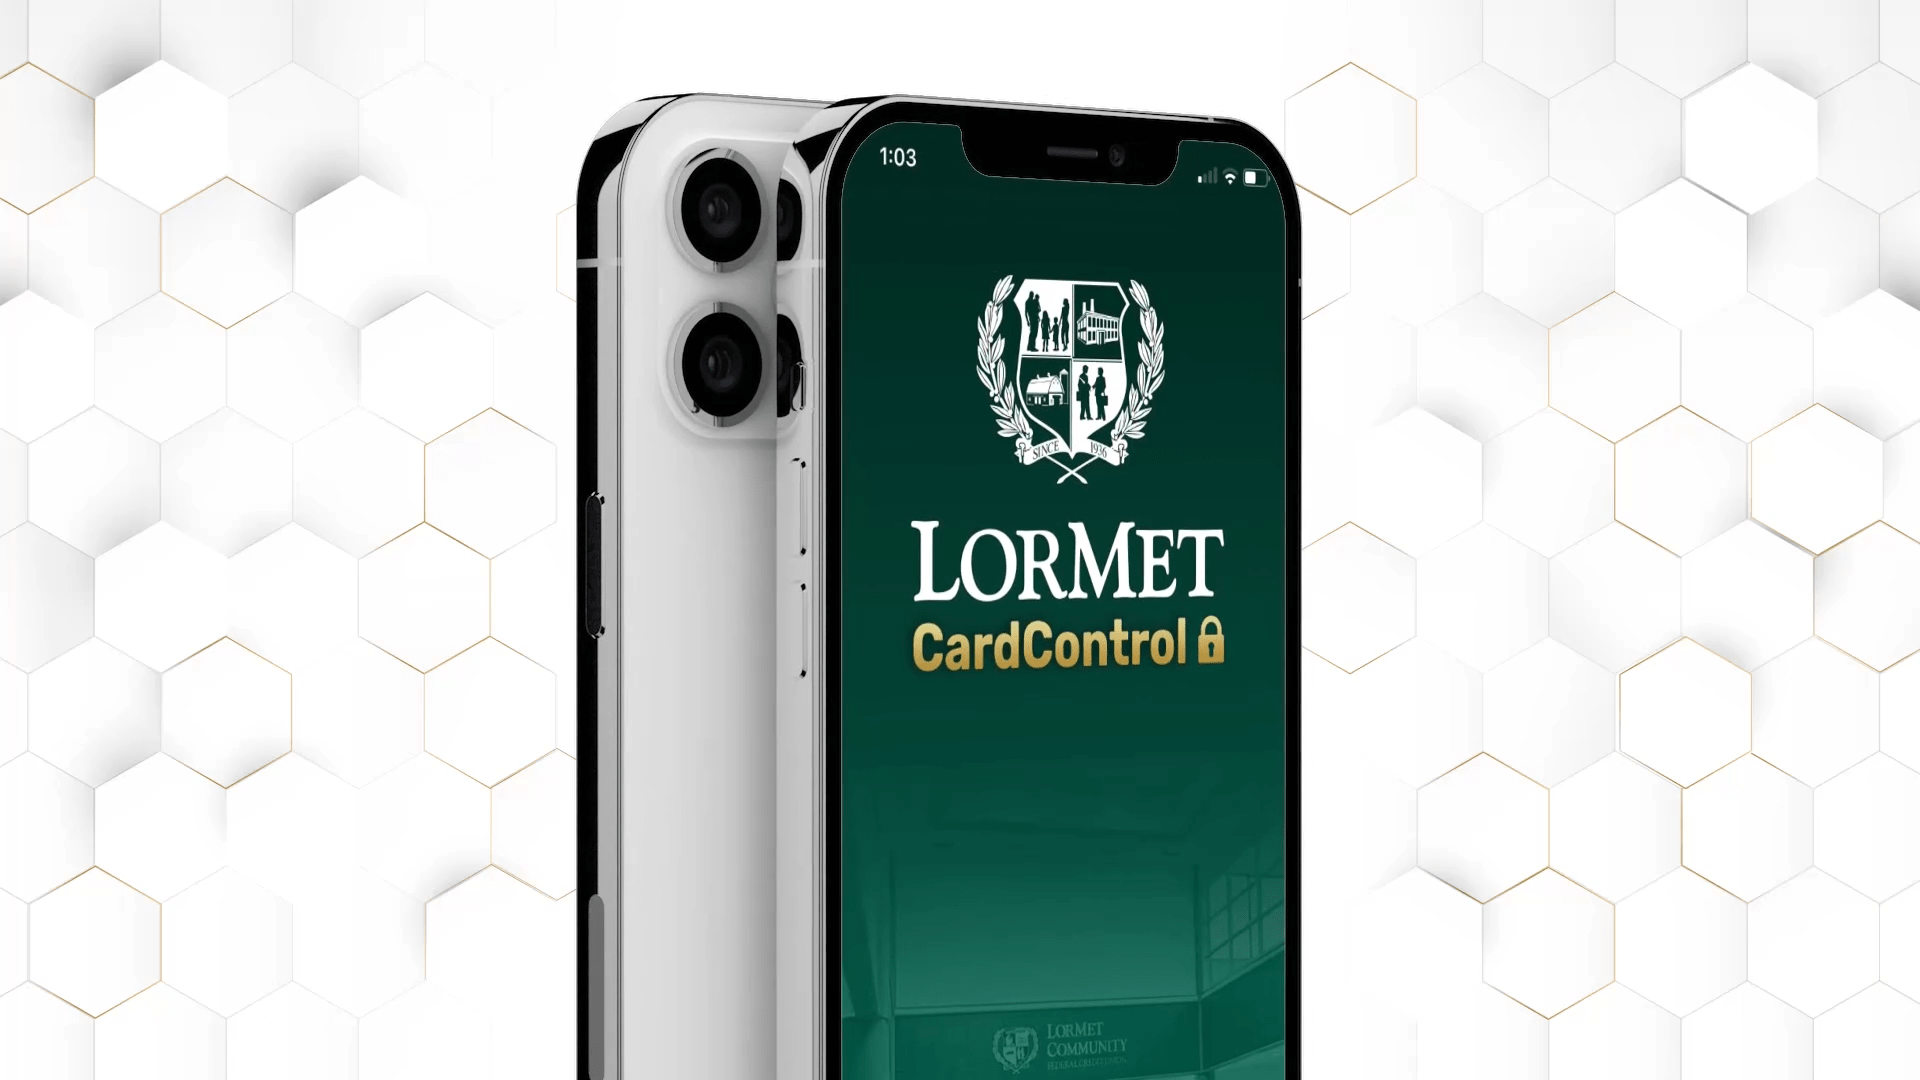 LorMet CardControl Intro Video